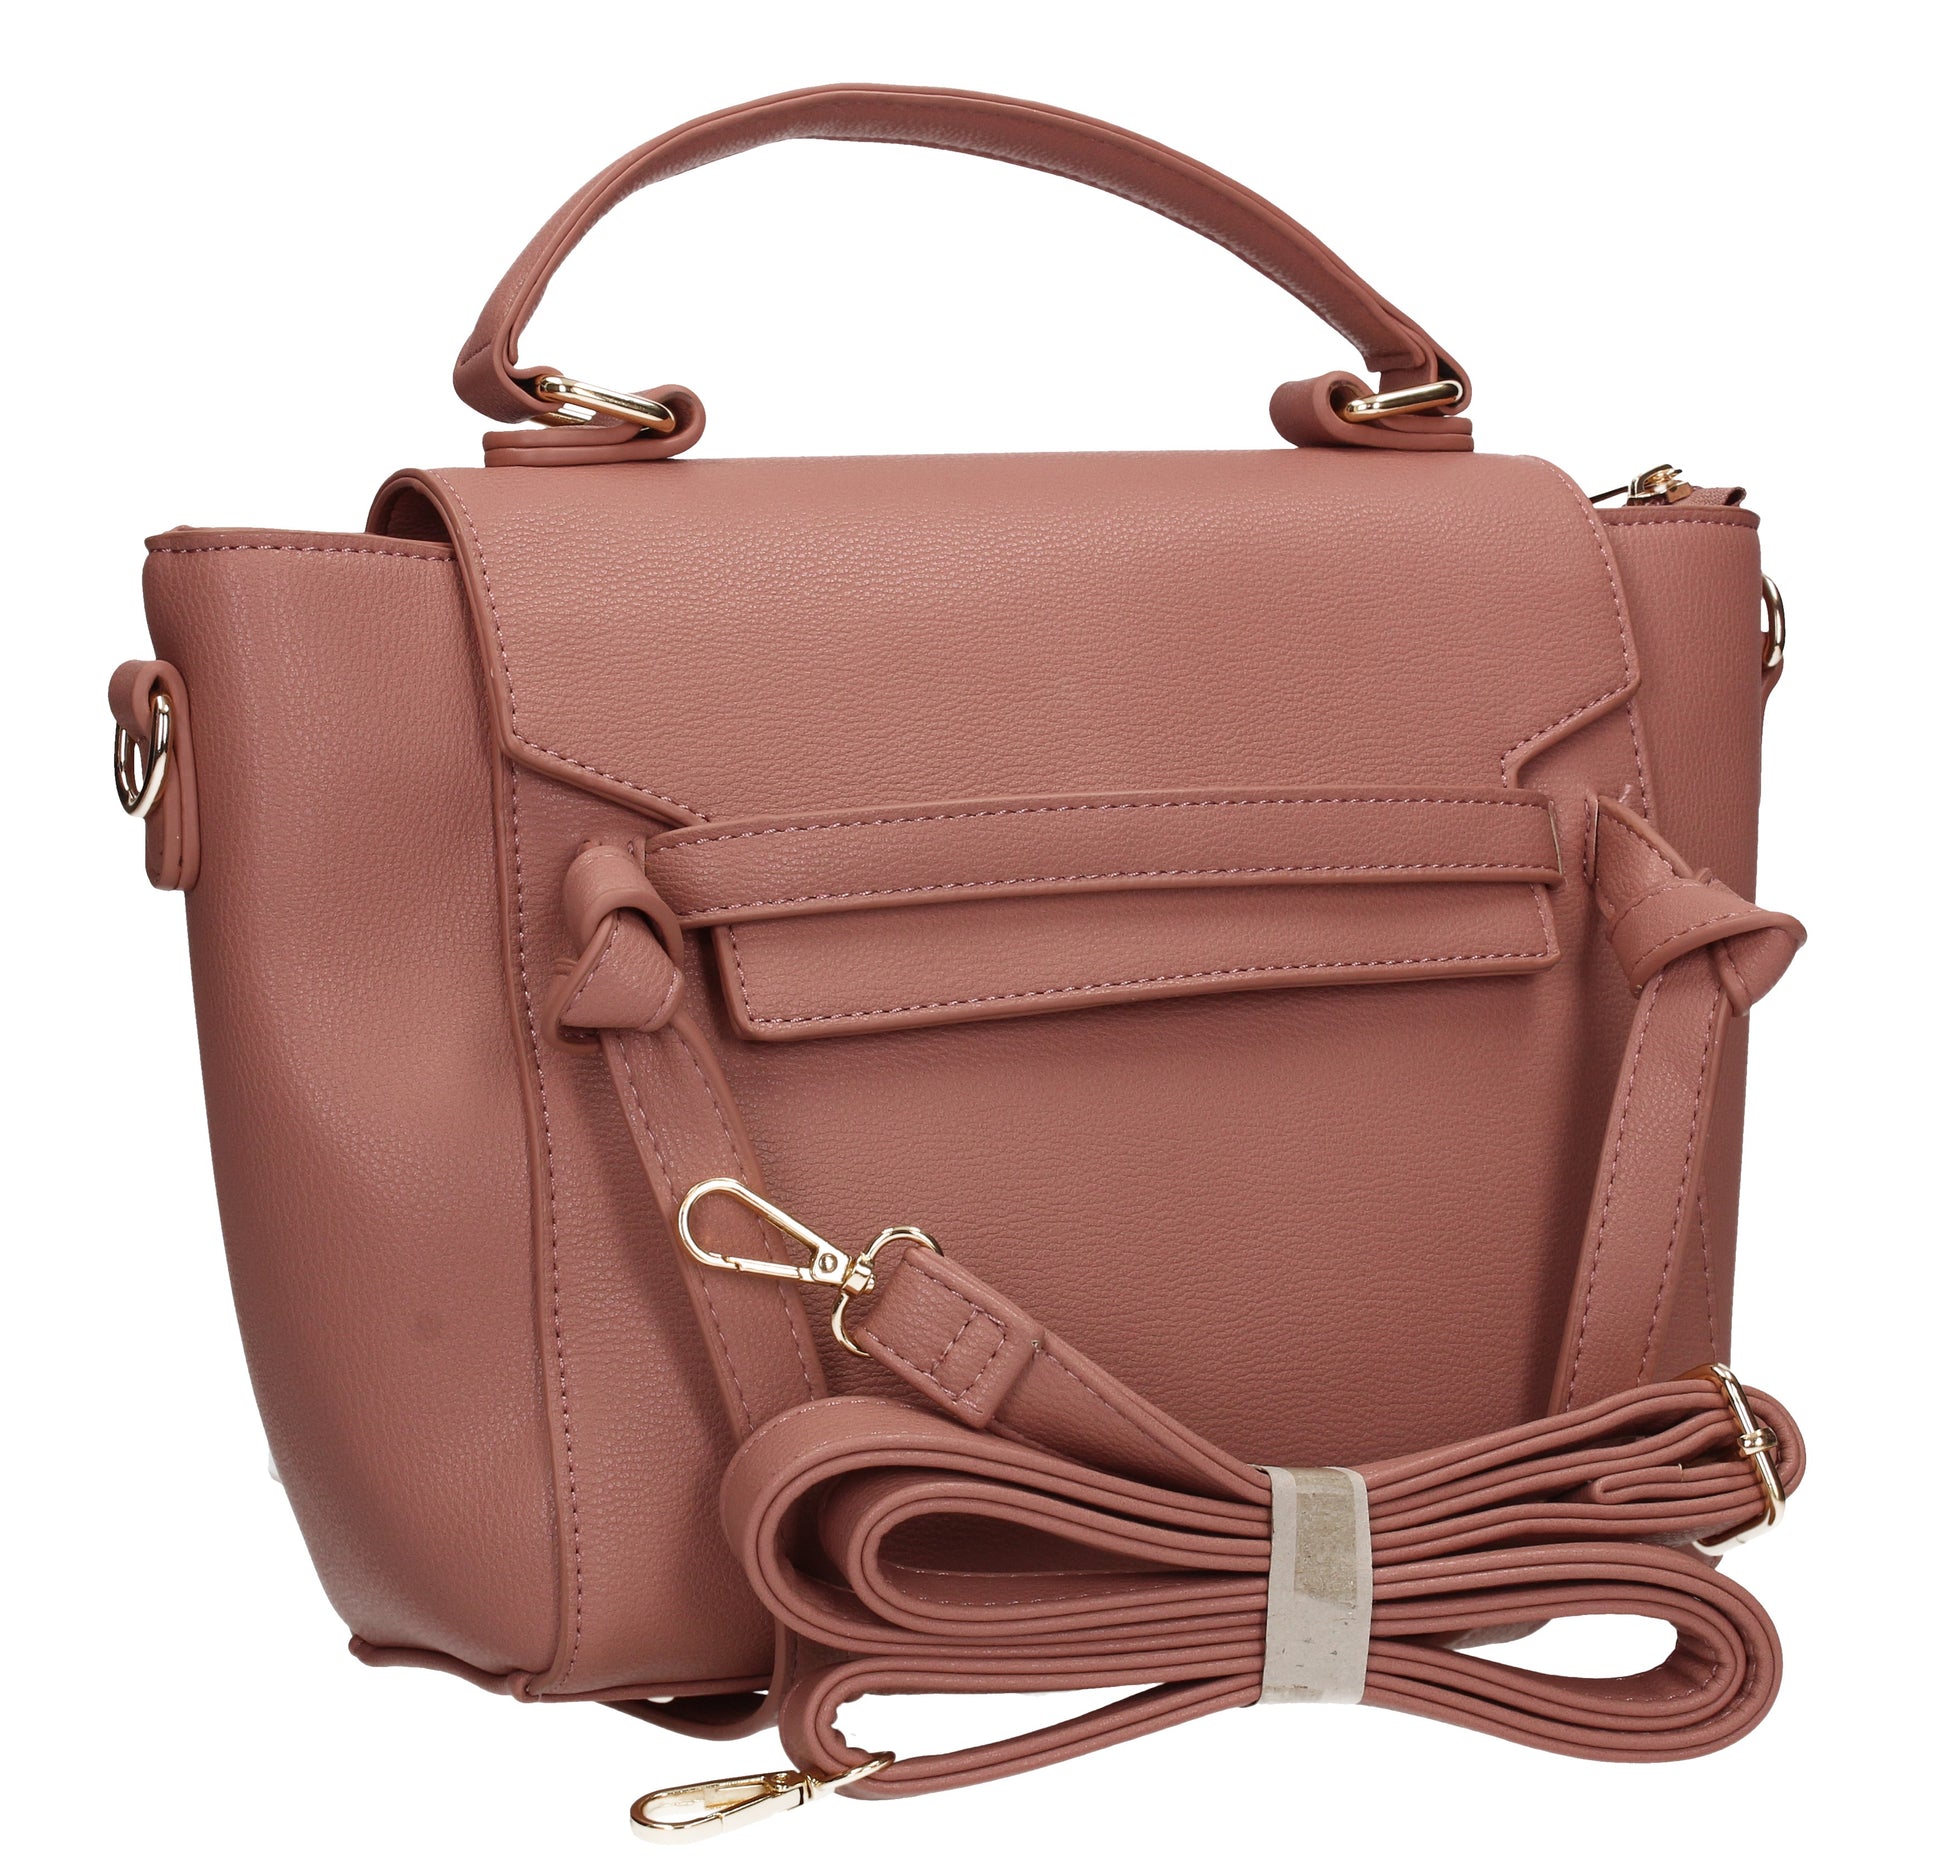 Buy your Juana Handbag Dark Pink Today! Buy with confidence from Swankyswans